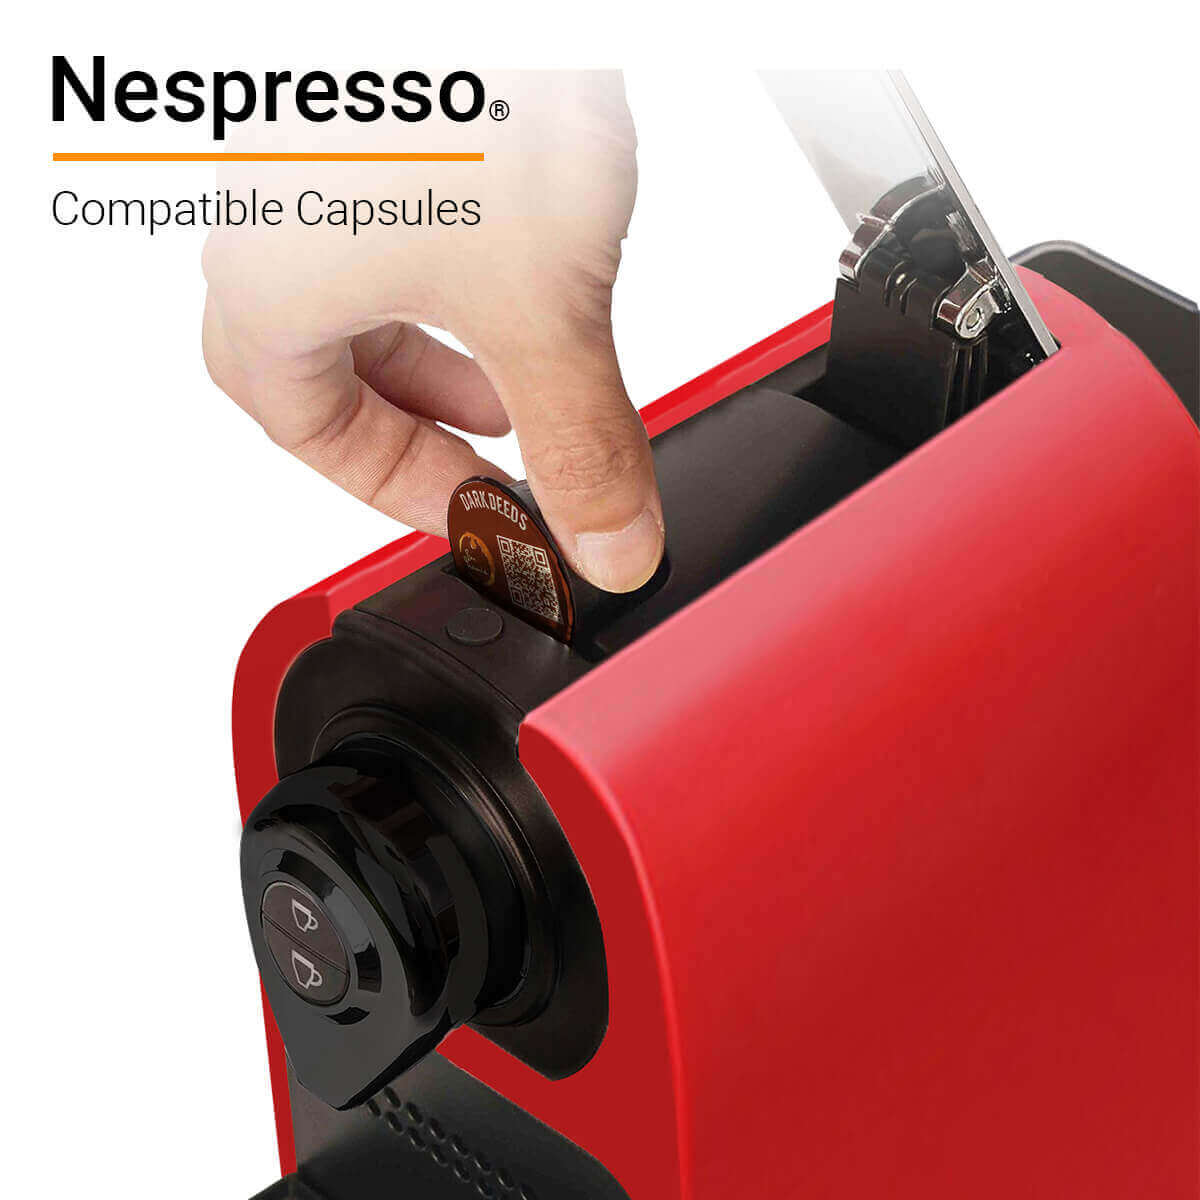 L'OR DECAF Espresso Capsules, 100 Count DECAF Ristretto, Single-Serve  Aluminum Coffee Capsules Compatible with the L'OR BARISTA System &  Nespresso